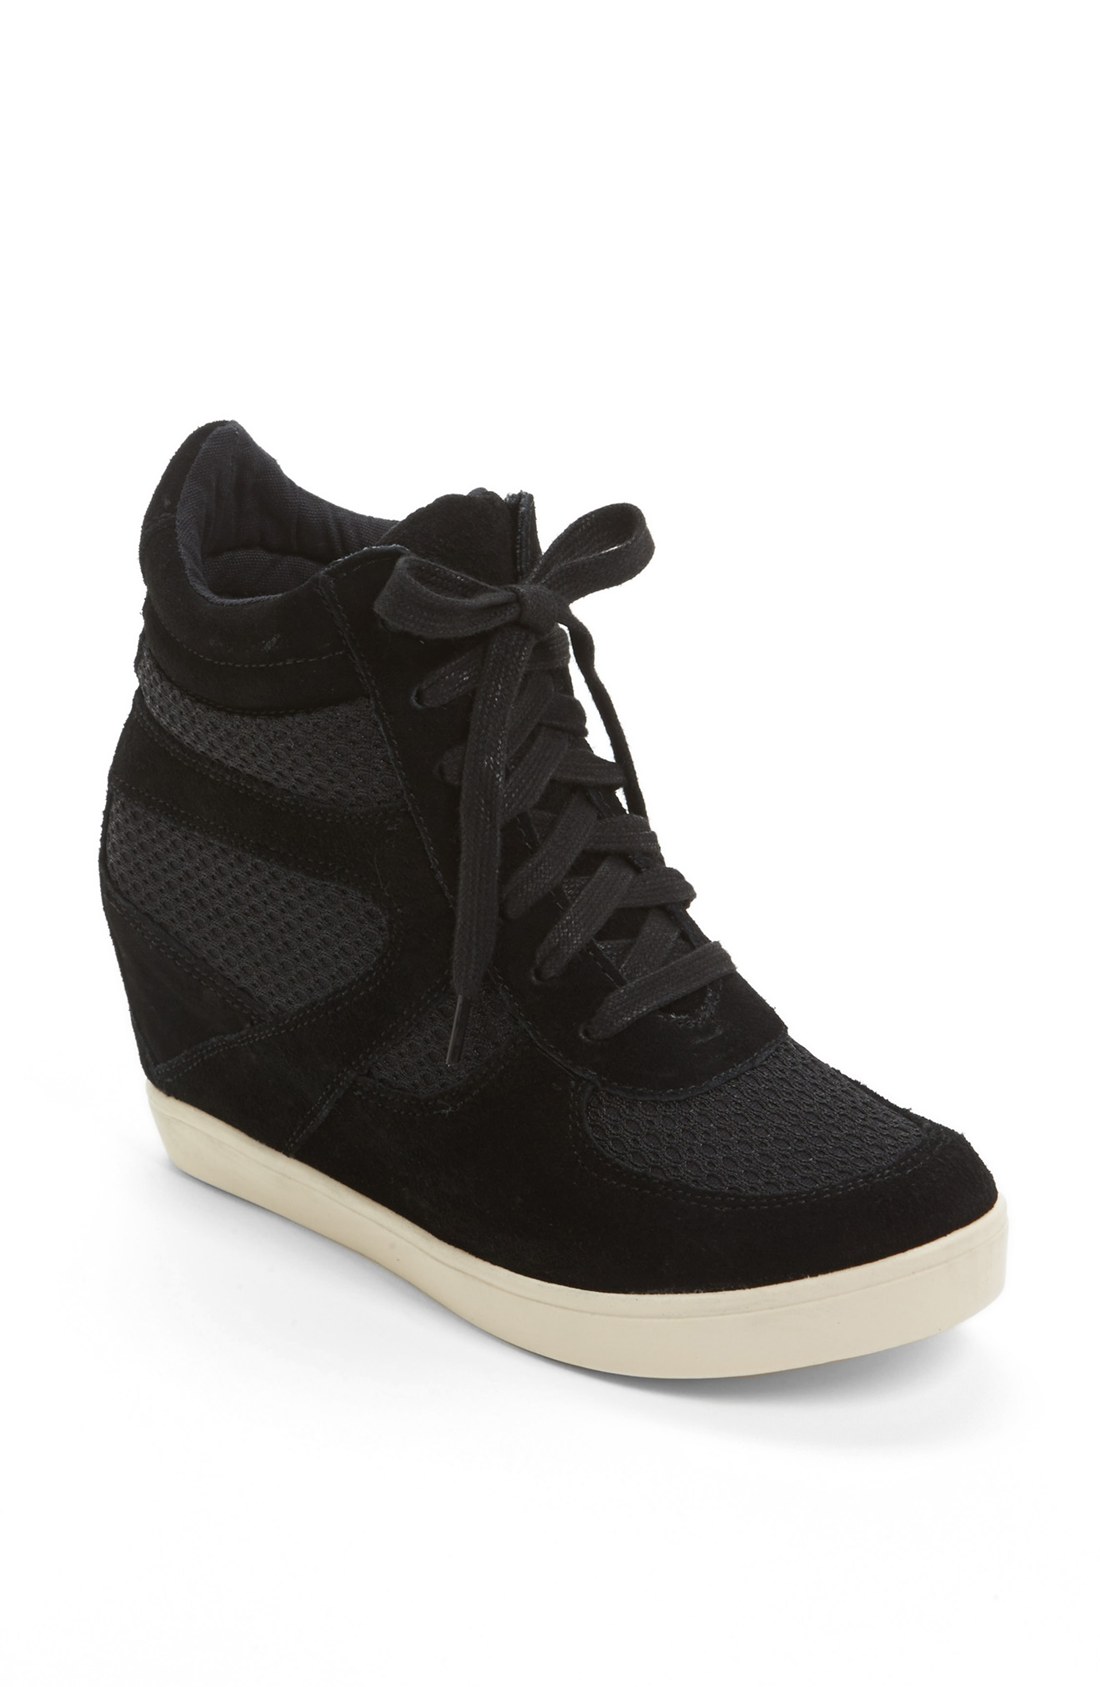 Steve Madden Olympax Wedge Sneaker in Black (Black Multi) | Lyst